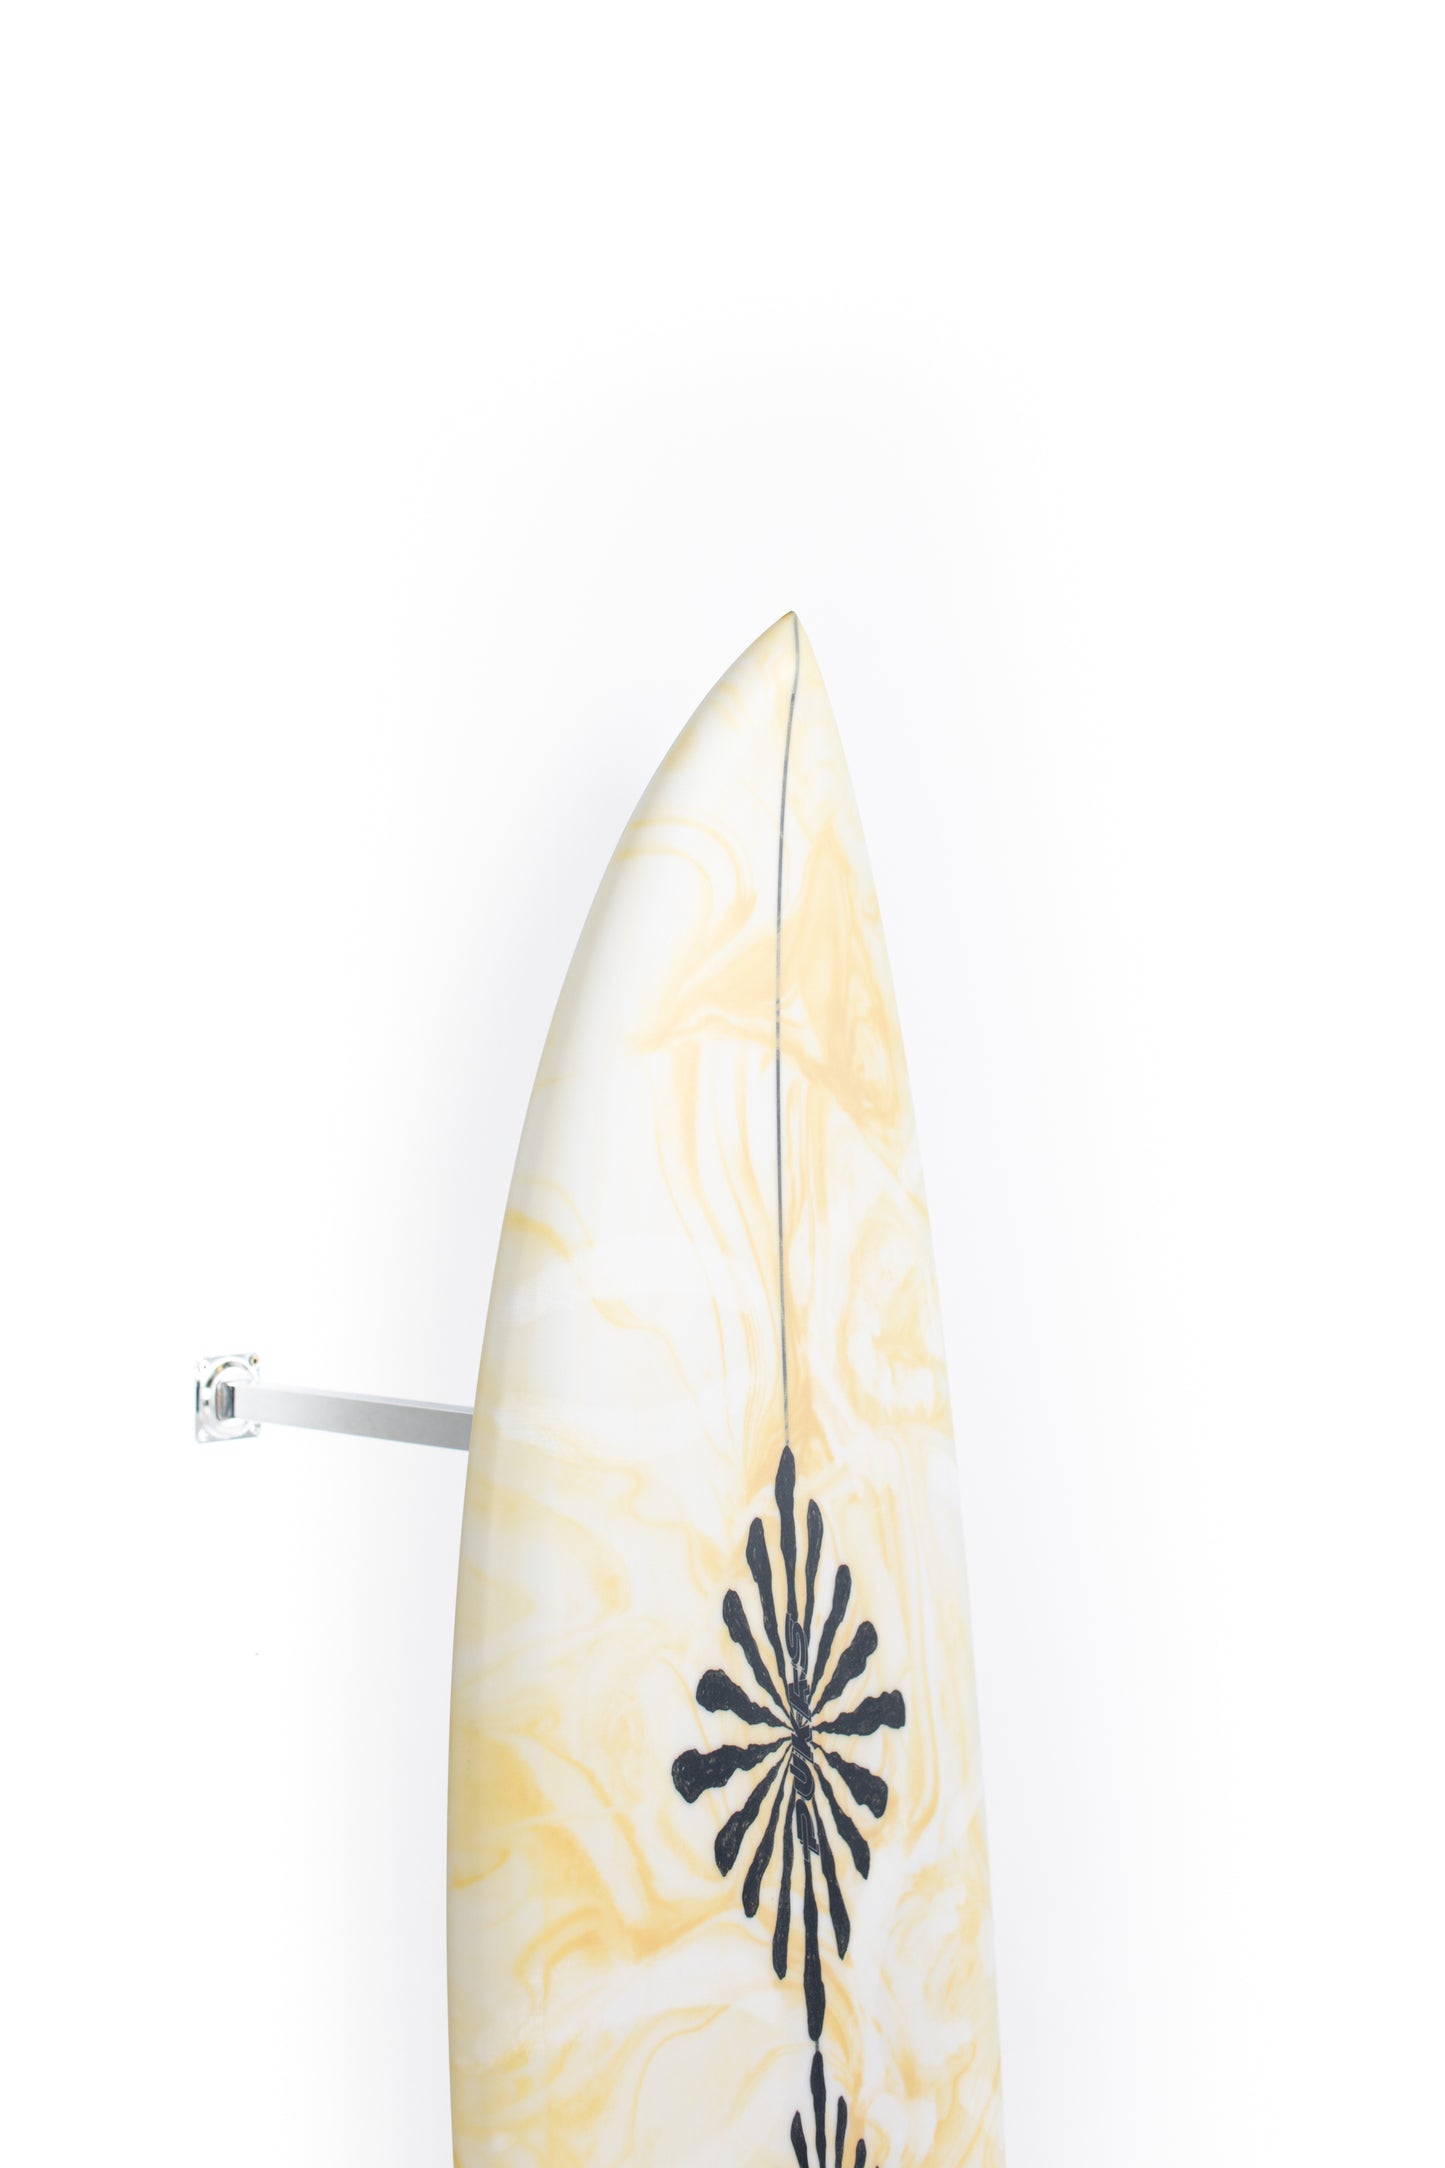 
                  
                    Pukas Surf Shop - Pukas Surfboards - ACID PLAN by Axel Lorentz - 5'9" x 20 x 2,44 x 30,77L - AX07950
                  
                